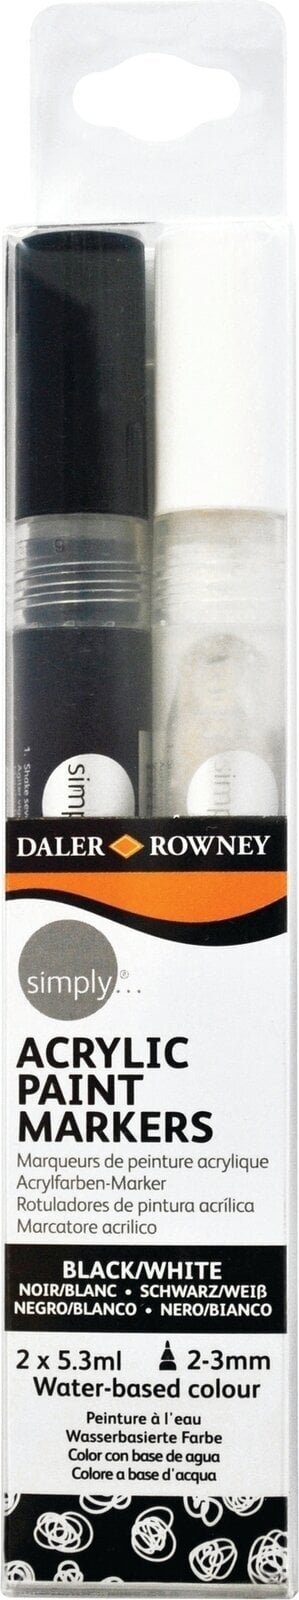 Felt-Tip Pen Daler Rowney Simply Acrylic Marker Set of Acryl Markers Black/White 2 x 5,3 ml